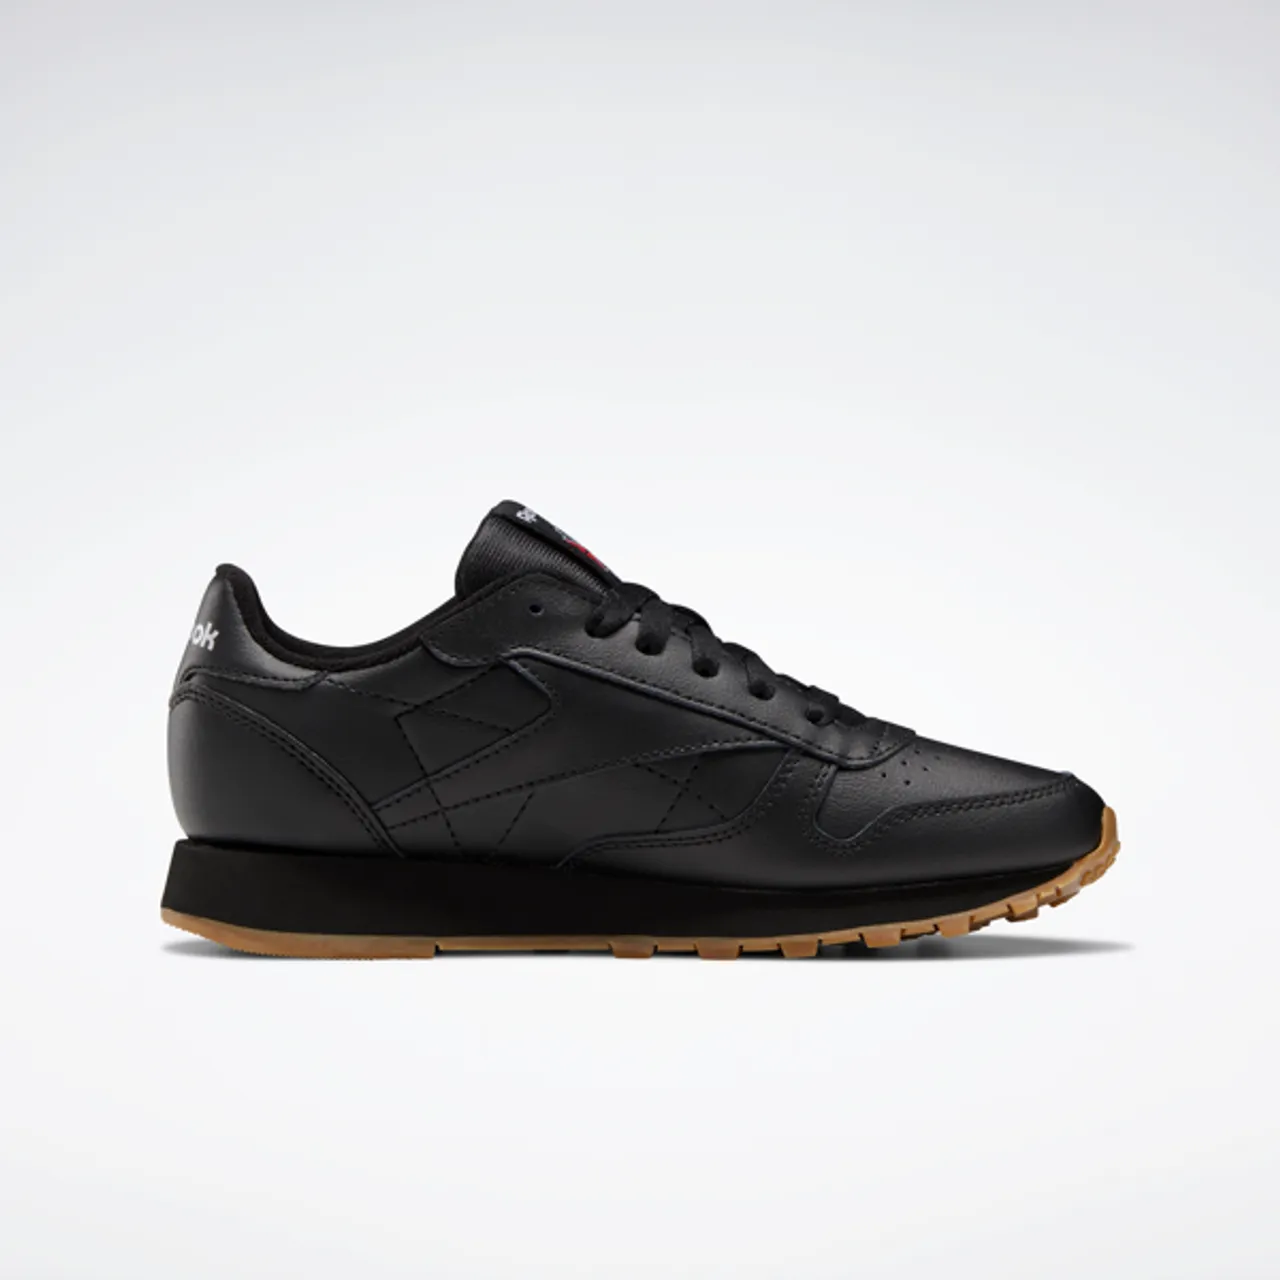 Sneaker REEBOK CLASSIC "Classic Leather" Gr. 38, schwarz (schwarz, schw) Schuhe